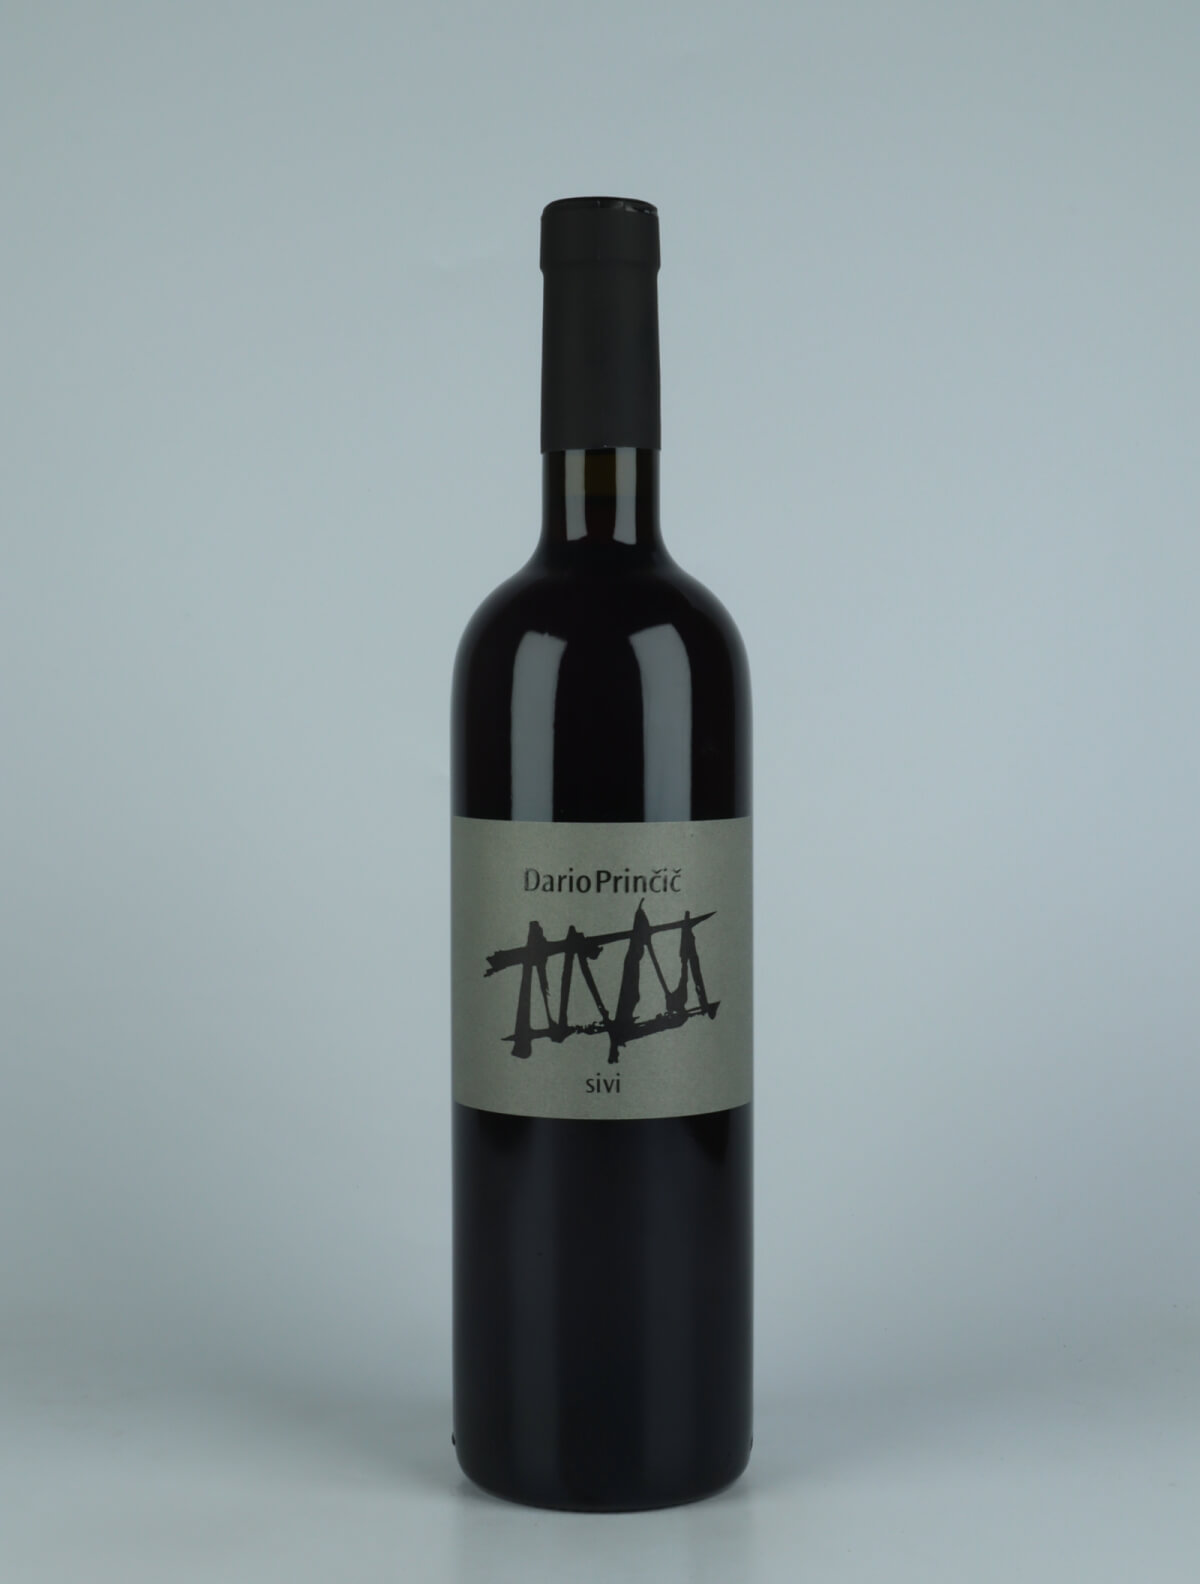 A bottle 2020 Sivi Orange wine from Dario Princic, Friuli in Italy